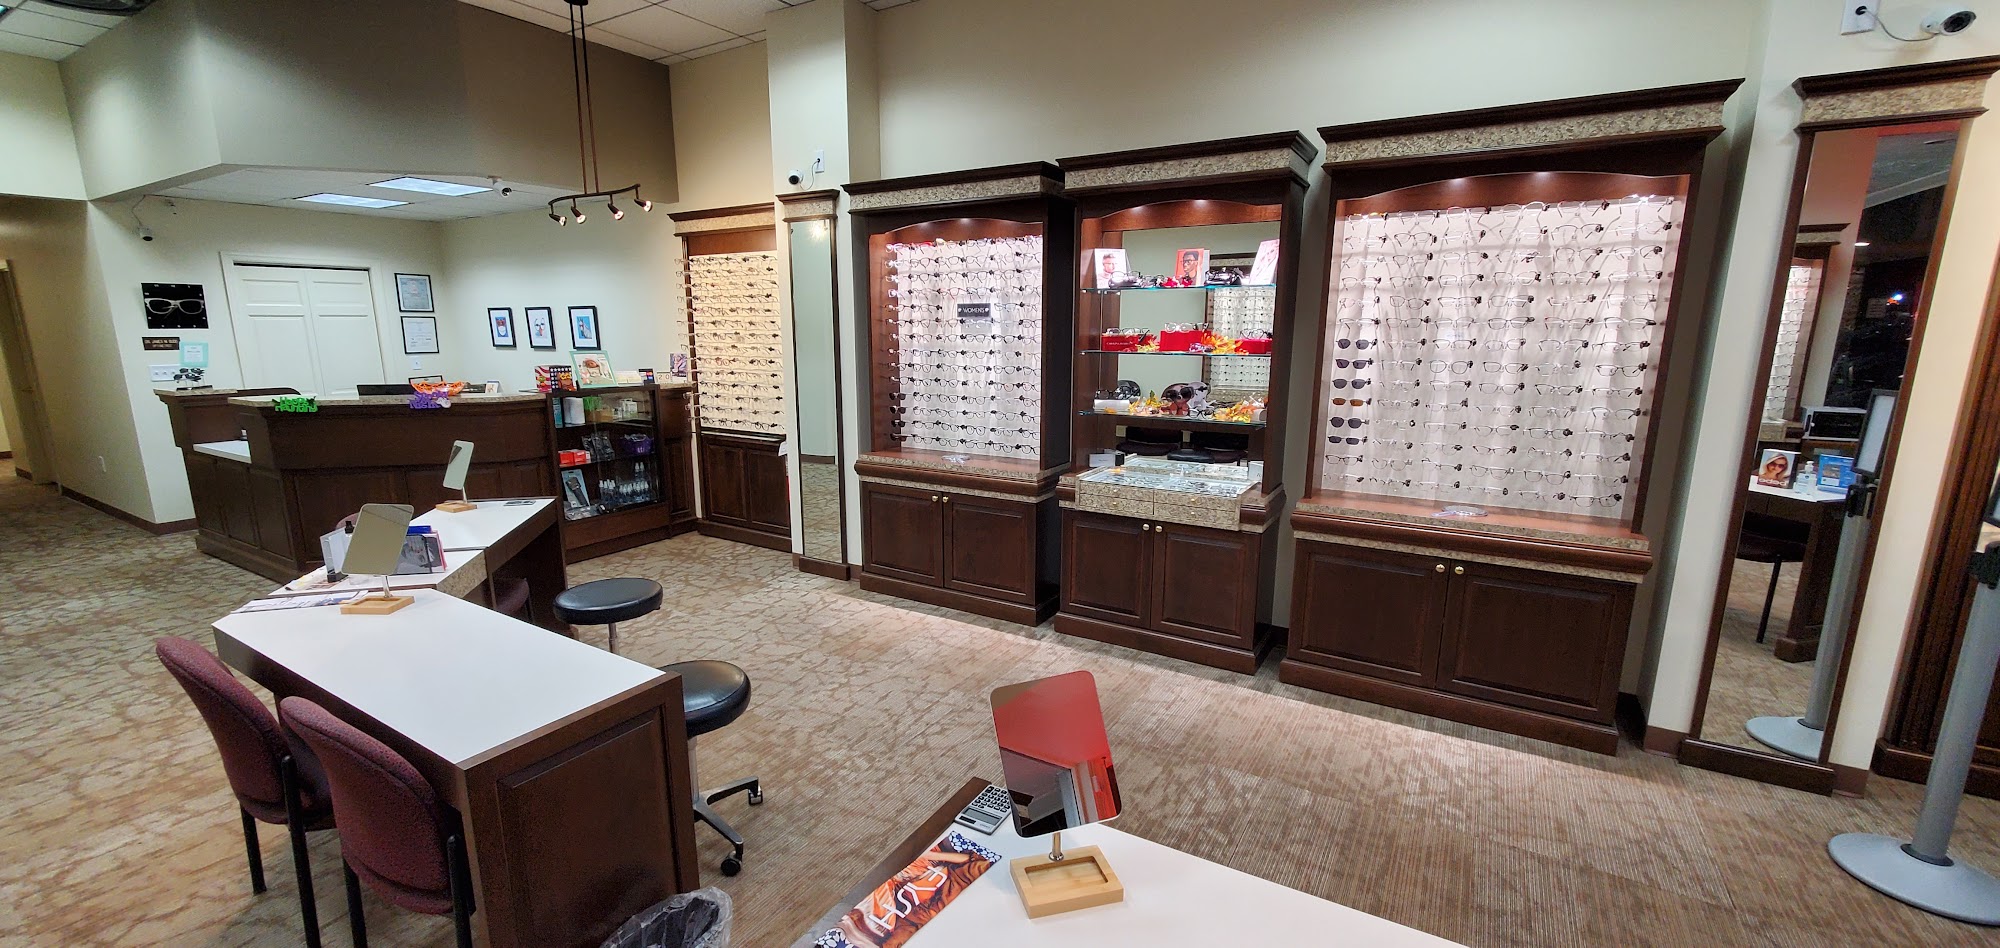 The Eyeglass Store